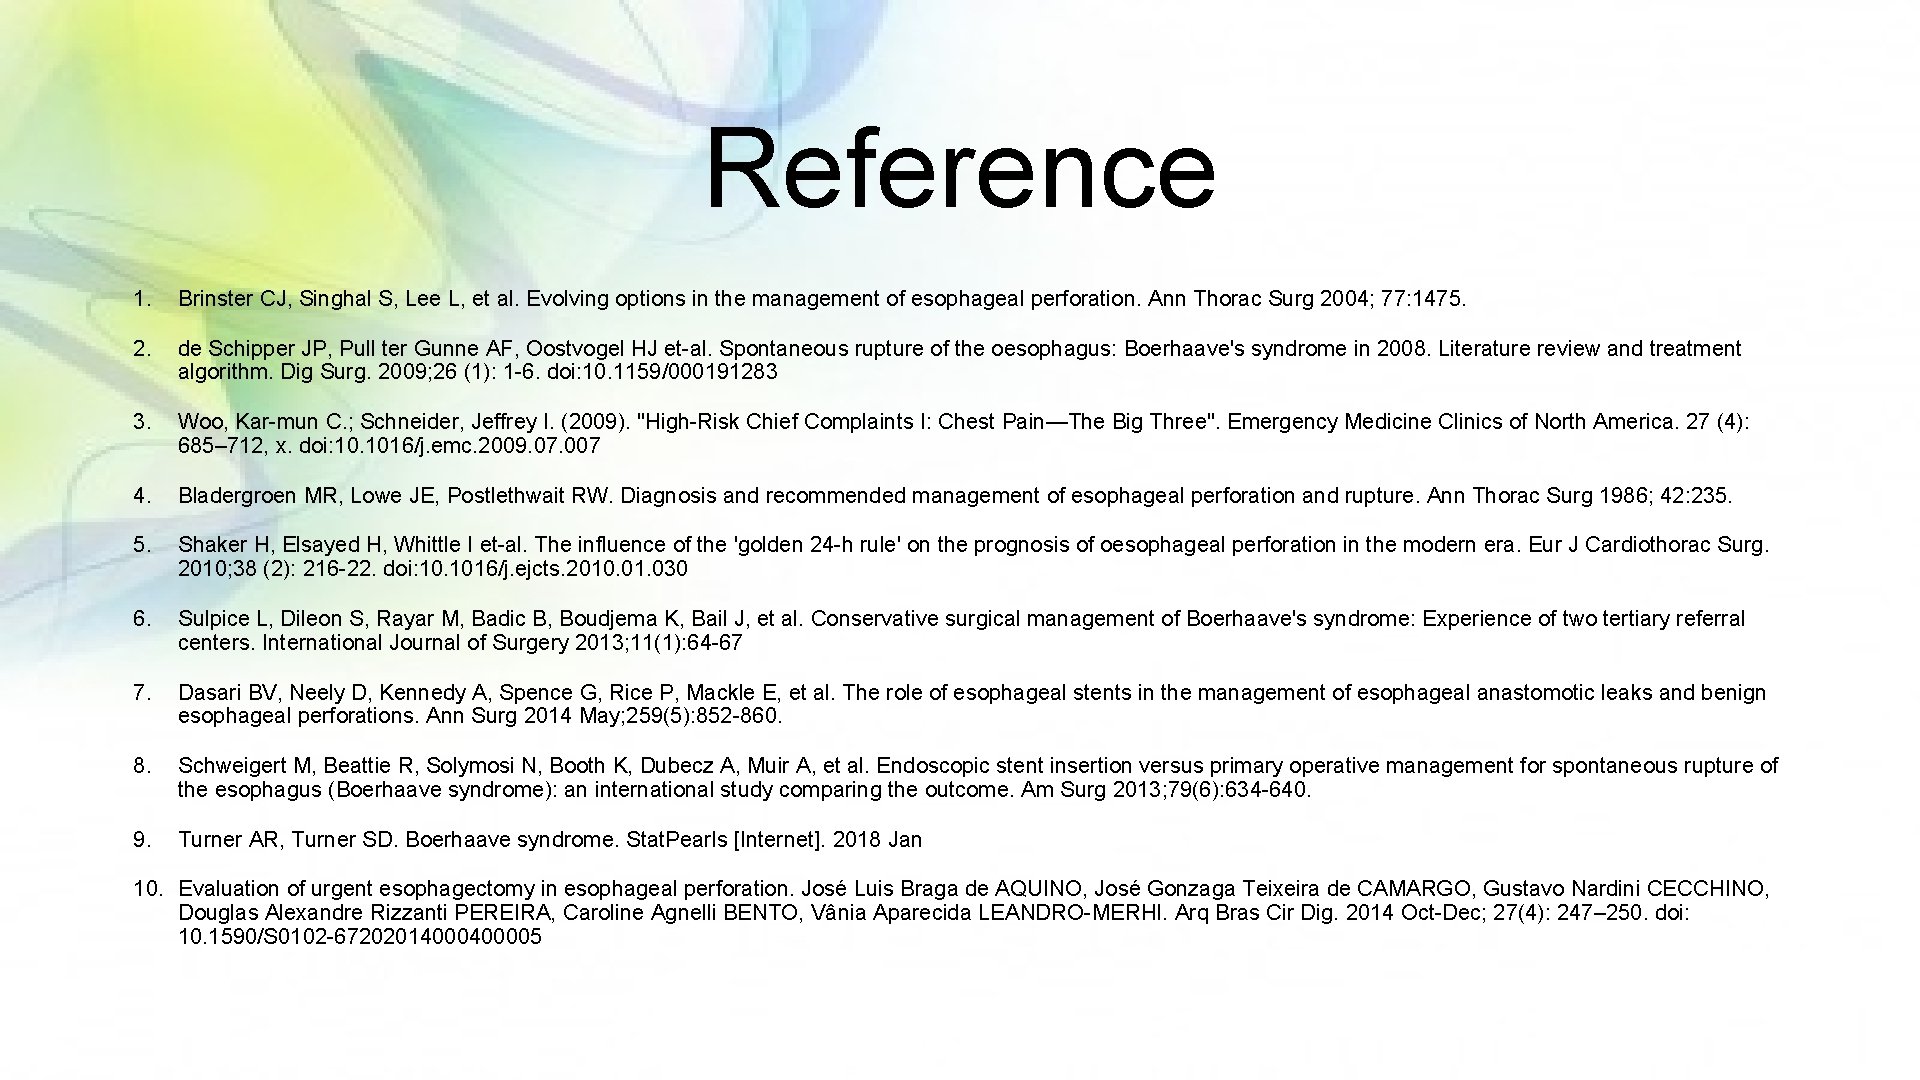 Reference 1. Brinster CJ, Singhal S, Lee L, et al. Evolving options in the